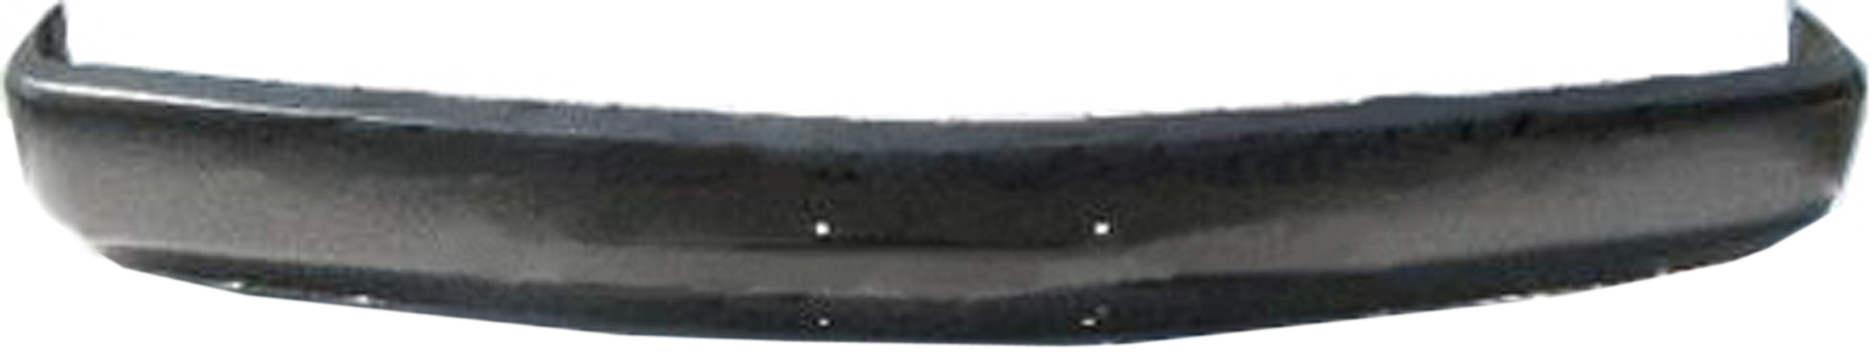 Aftermarket METAL FRONT BUMPERS for CHEVROLET - K1500 SUBURBAN, K1500 SUBURBAN,92-99,Front bumper face bar